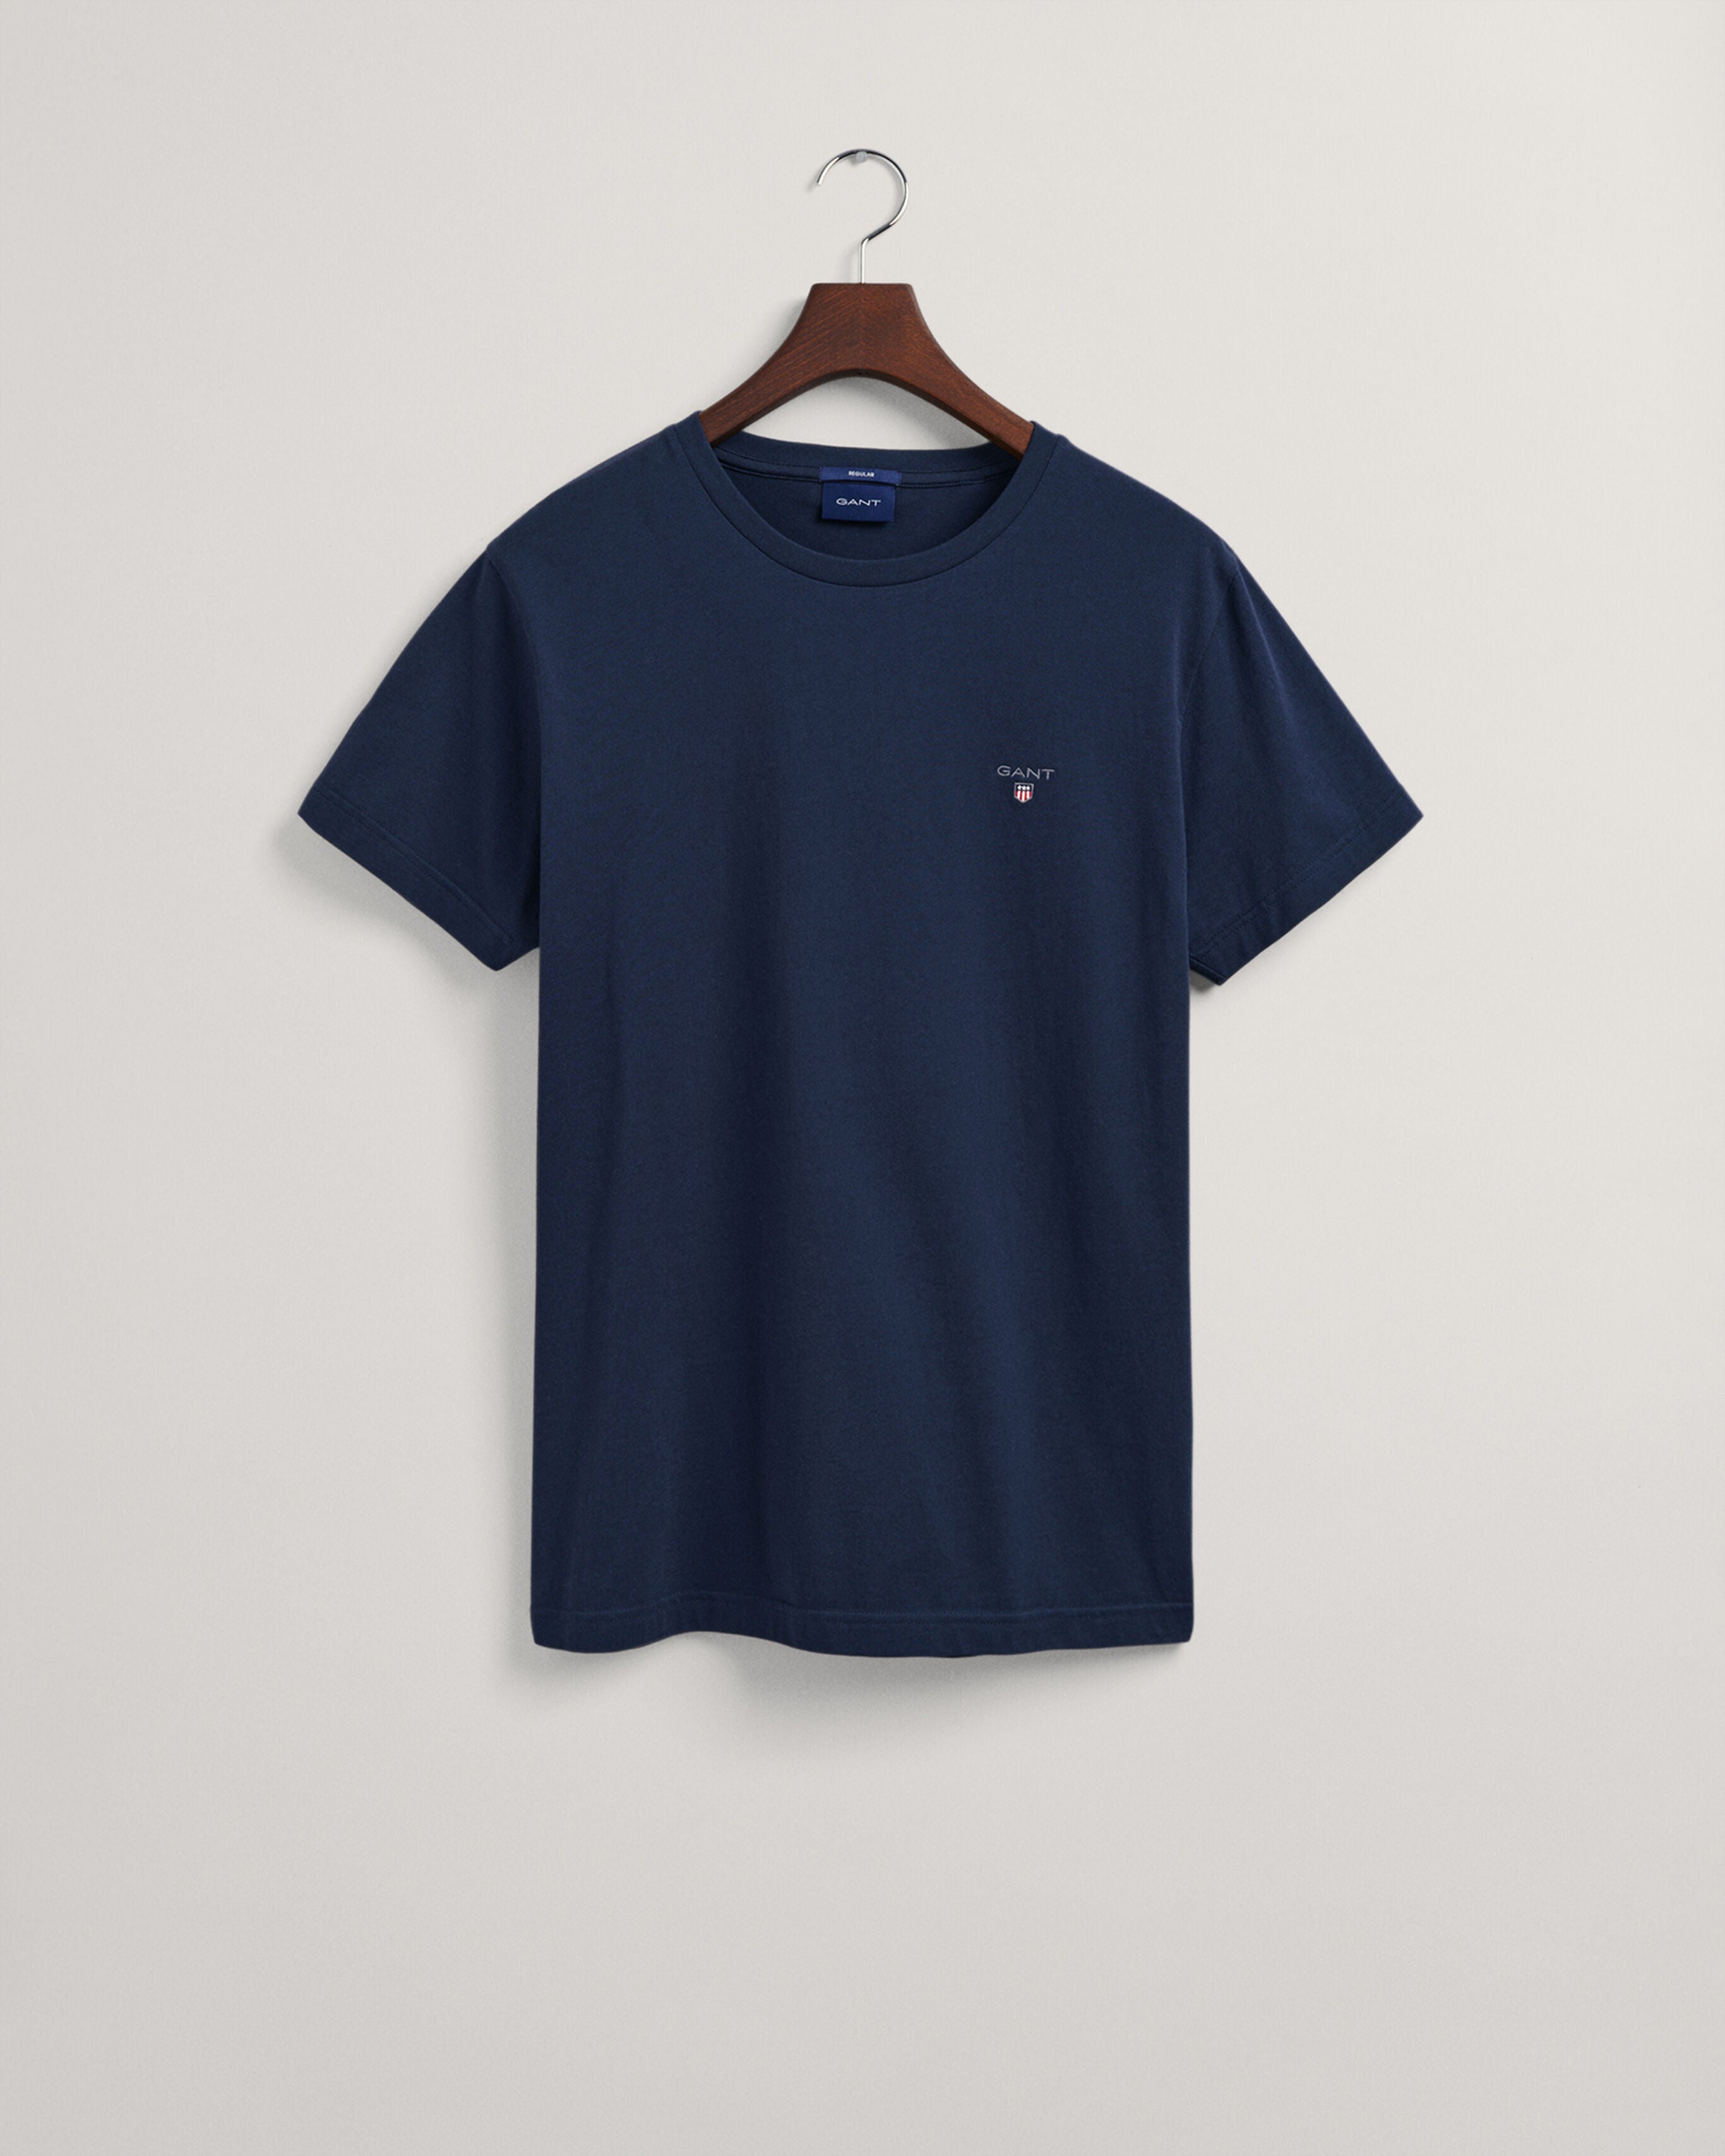 Gant t-shirt navy/433